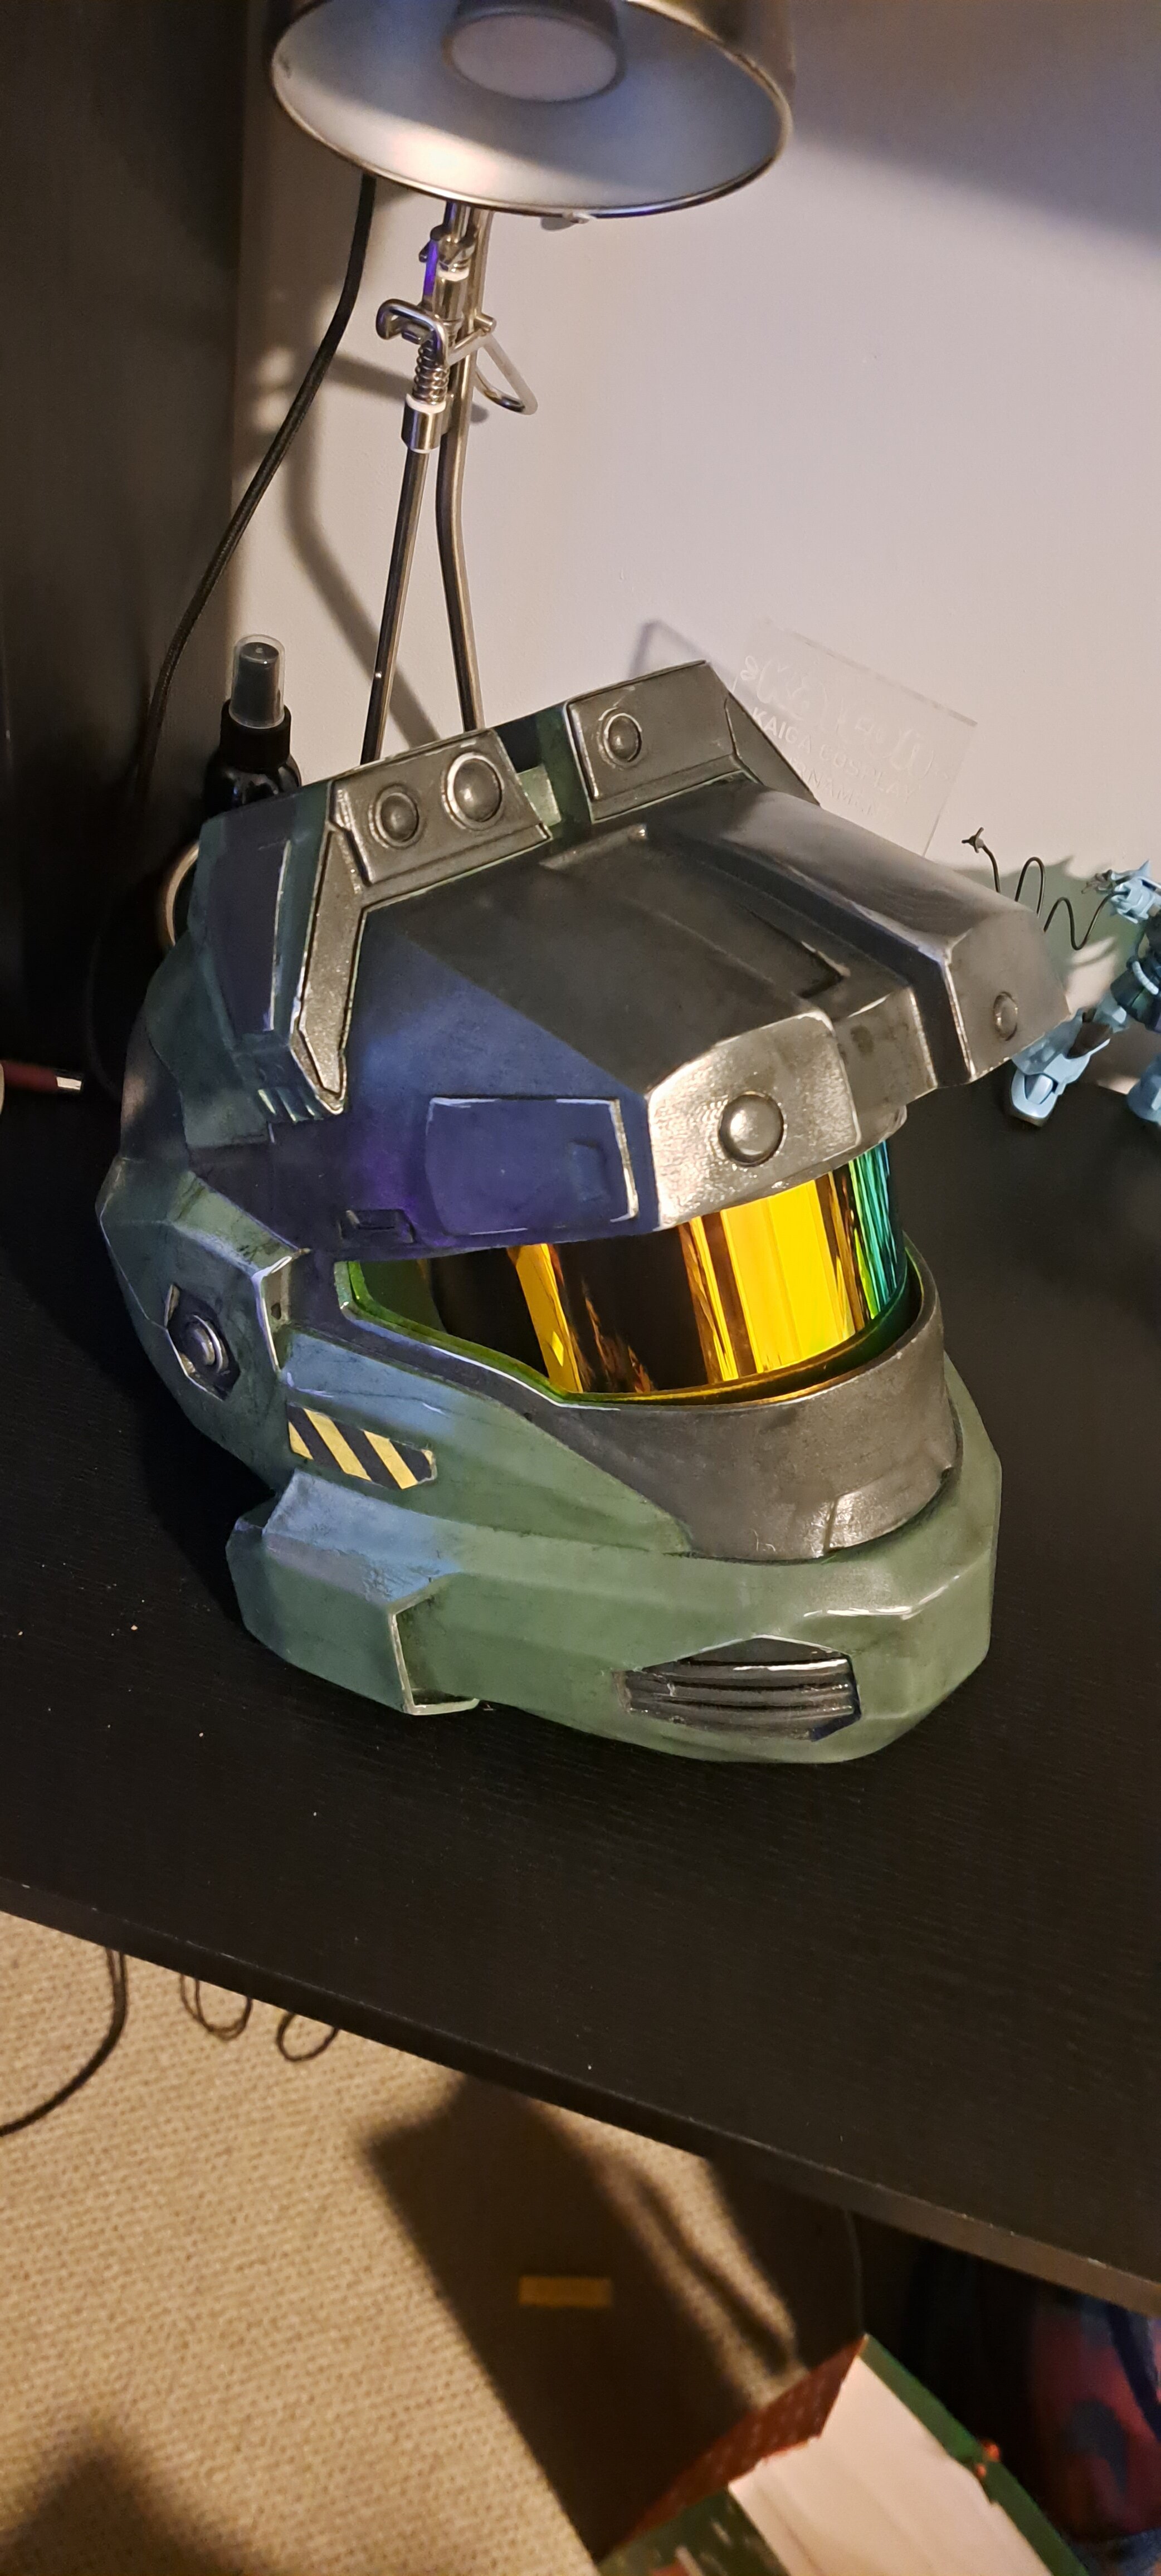 Completed helmet (side view)